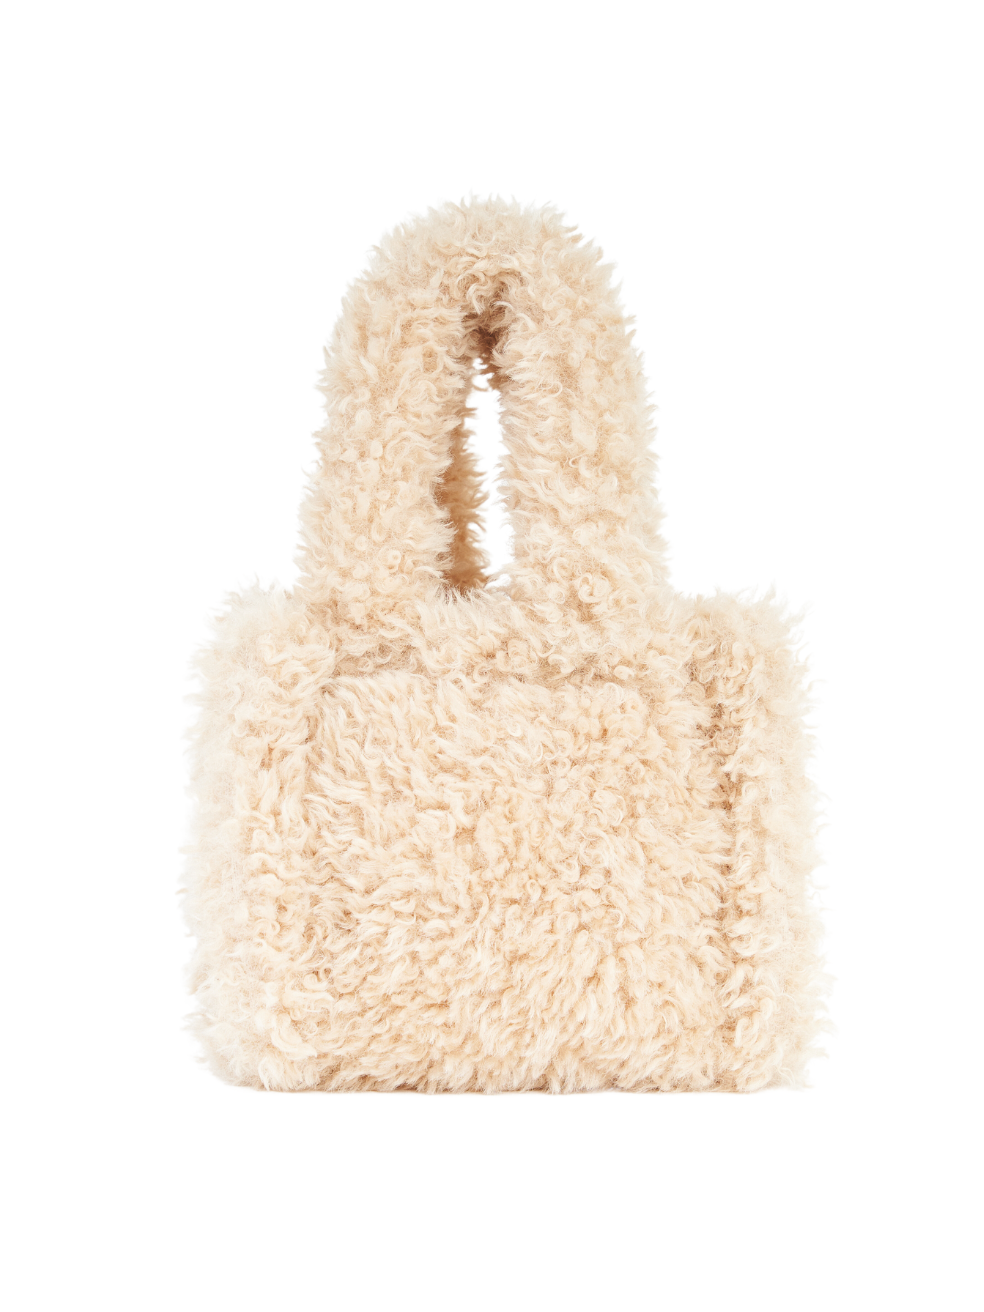 Mini Tote Bag Slow Fashion Zero Waste Accessories Canada Vegan Sherpa Fur Sandy Beige